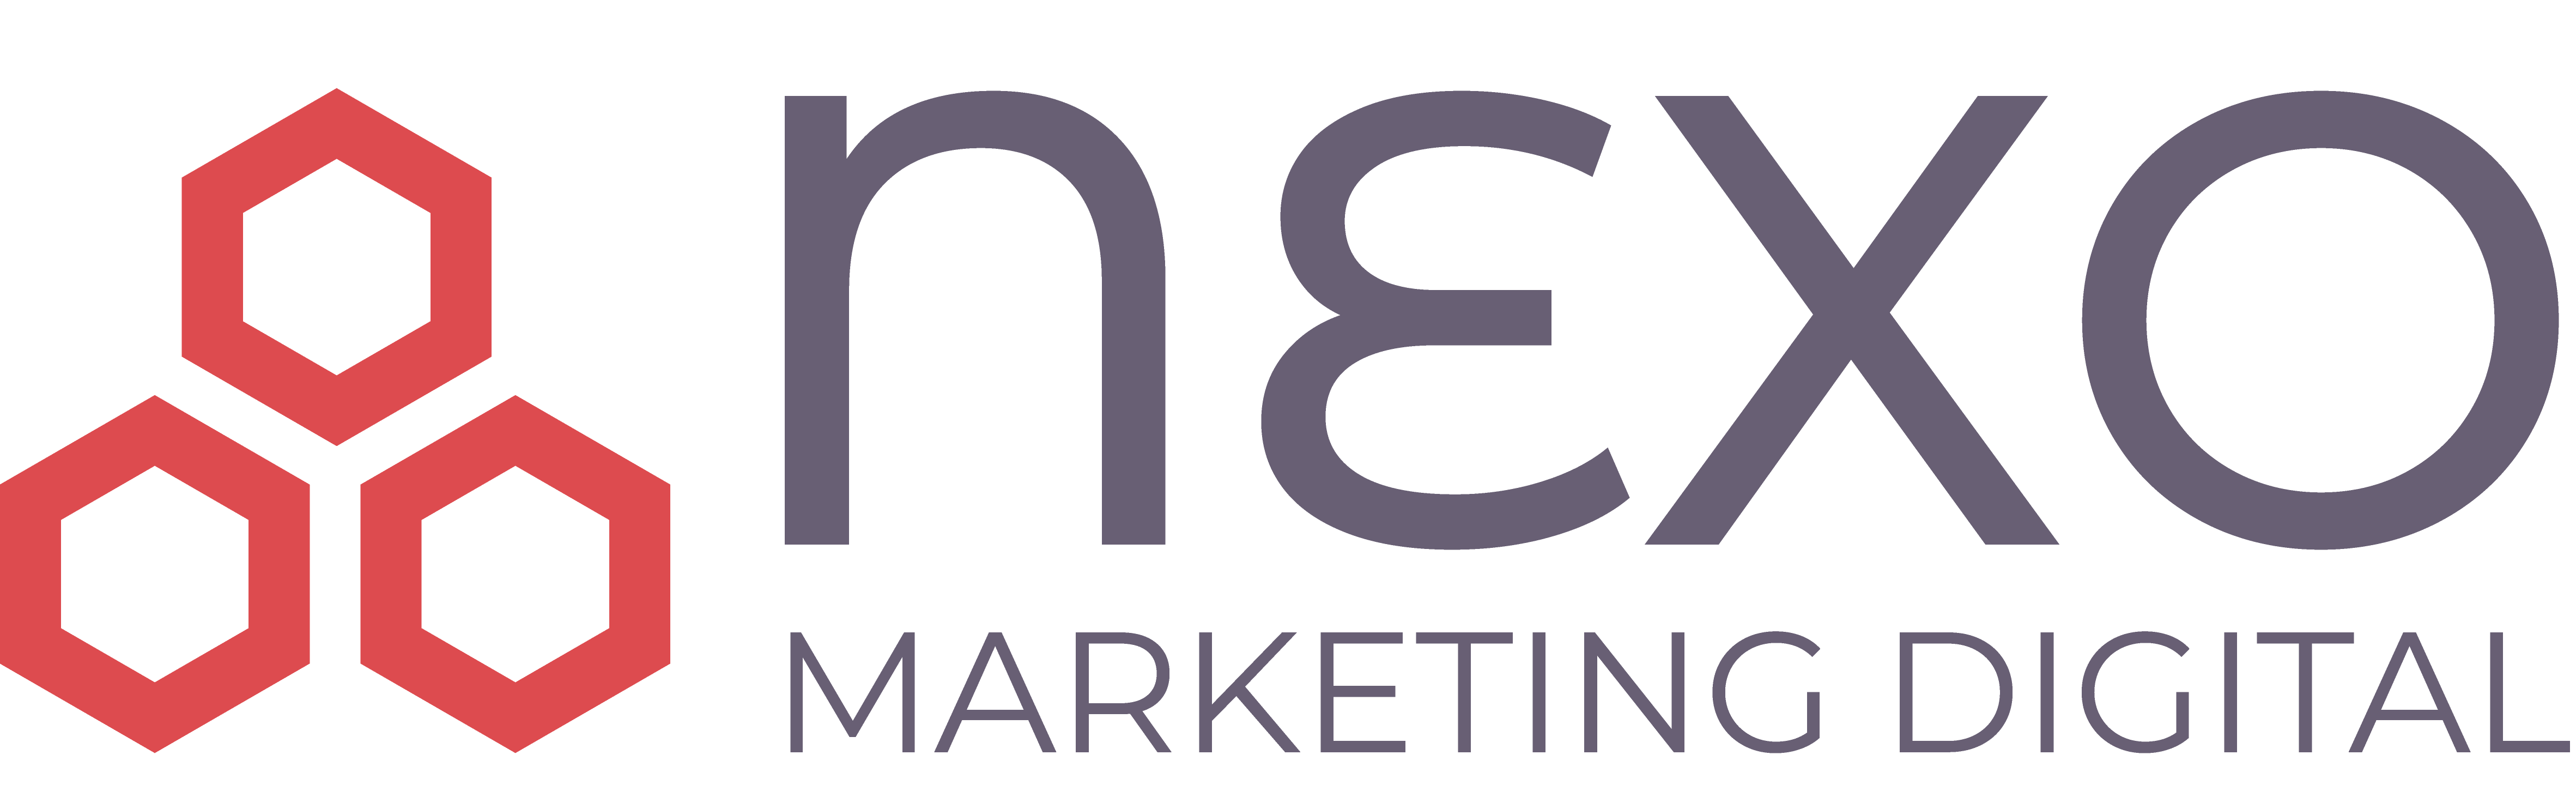 Nexo Marketing Digital